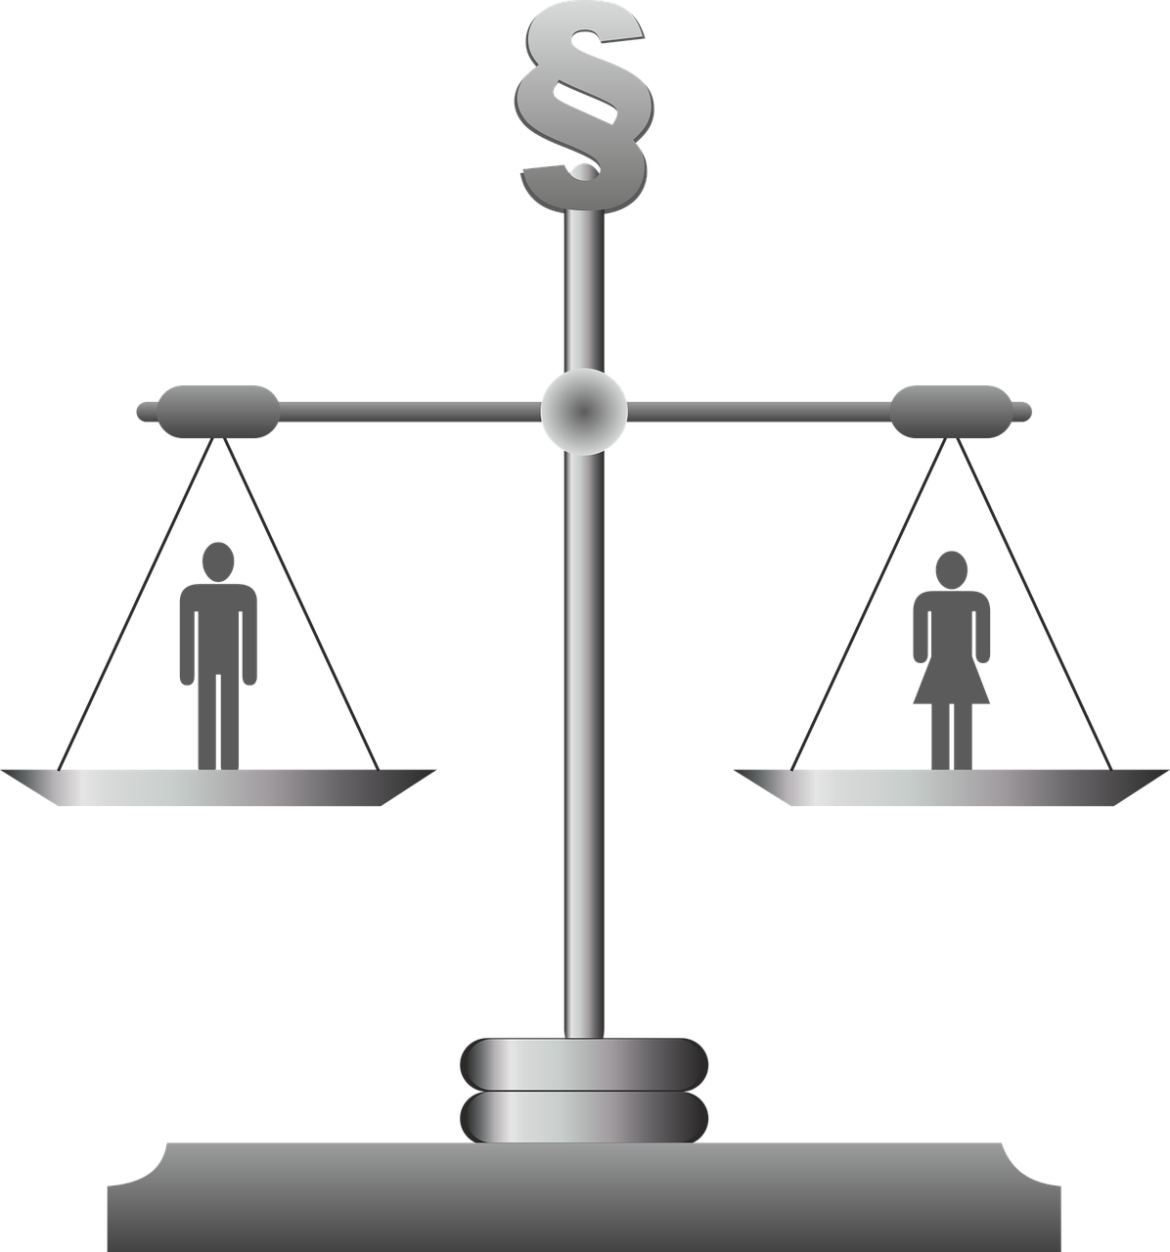 https://pixabay.com/en/horizontal-justice-right-law-1452535/